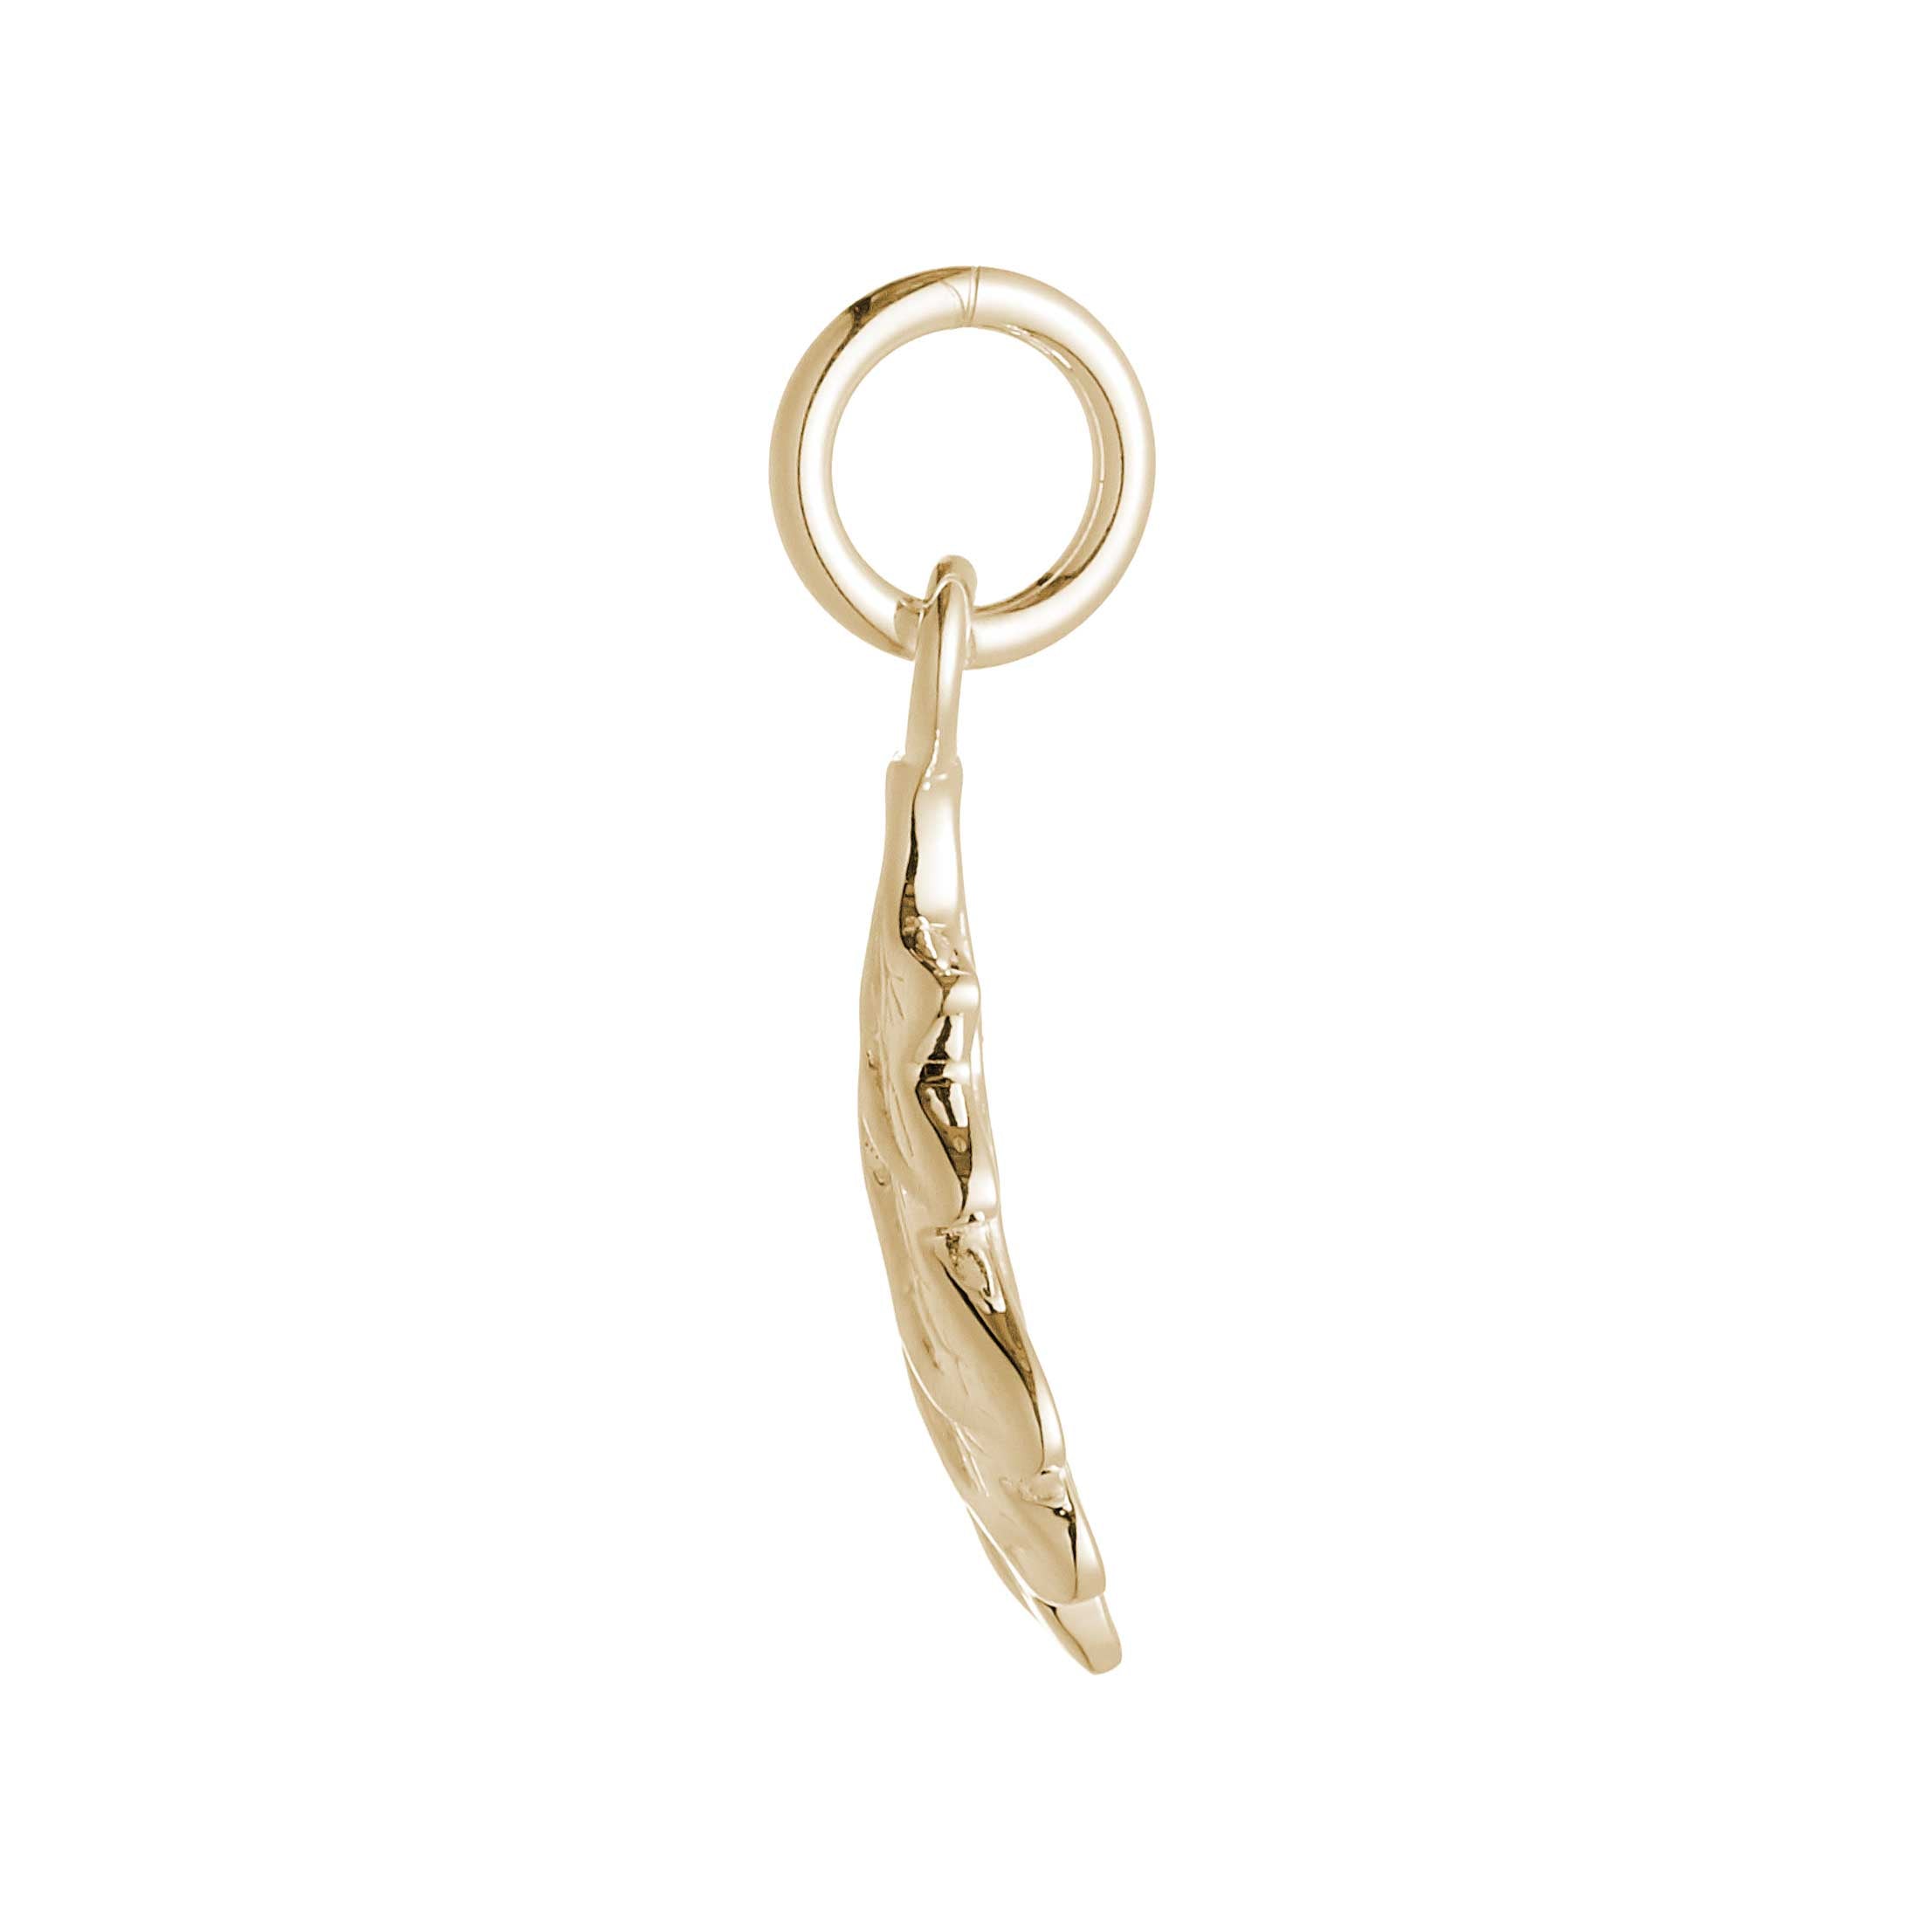 Solid gold acorn oak leaf charm Scarlett Jewellery